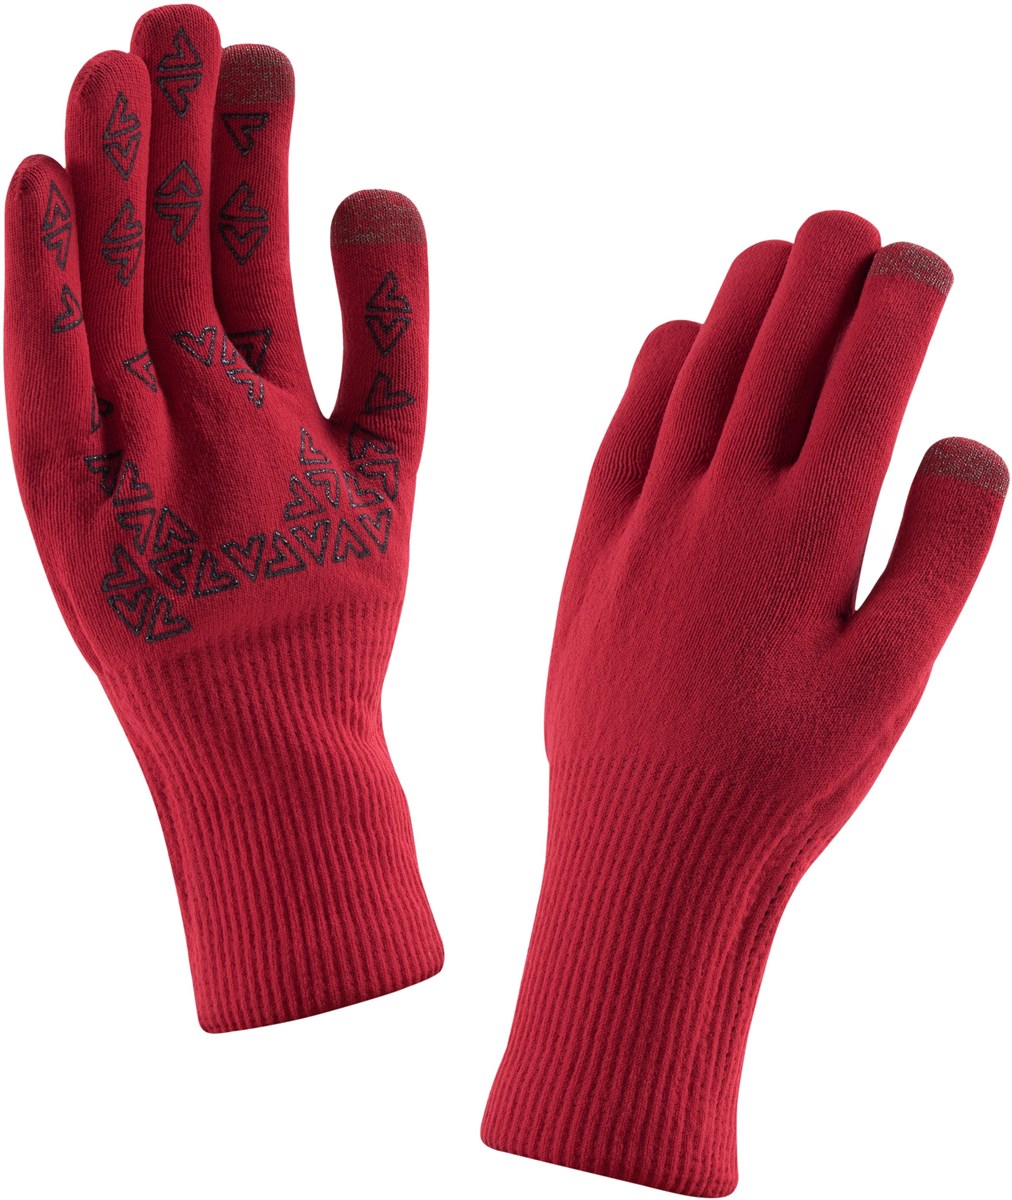 Sealskinz Ultra Grip Road Long Finger Gloves product image